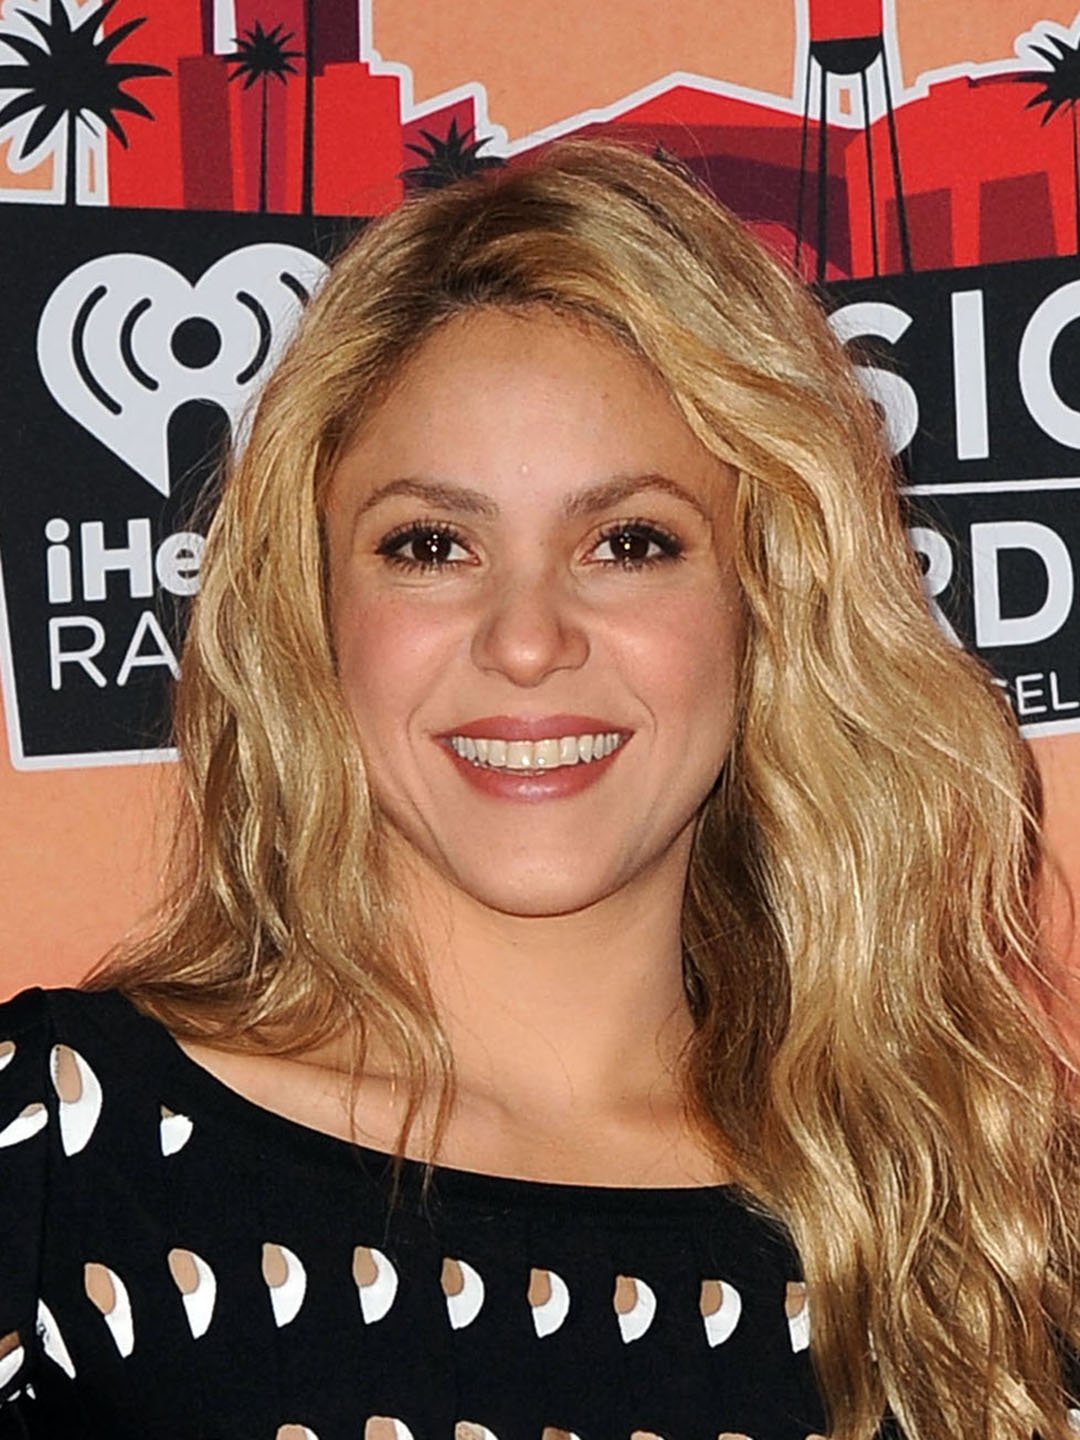 How tall is Shakira?